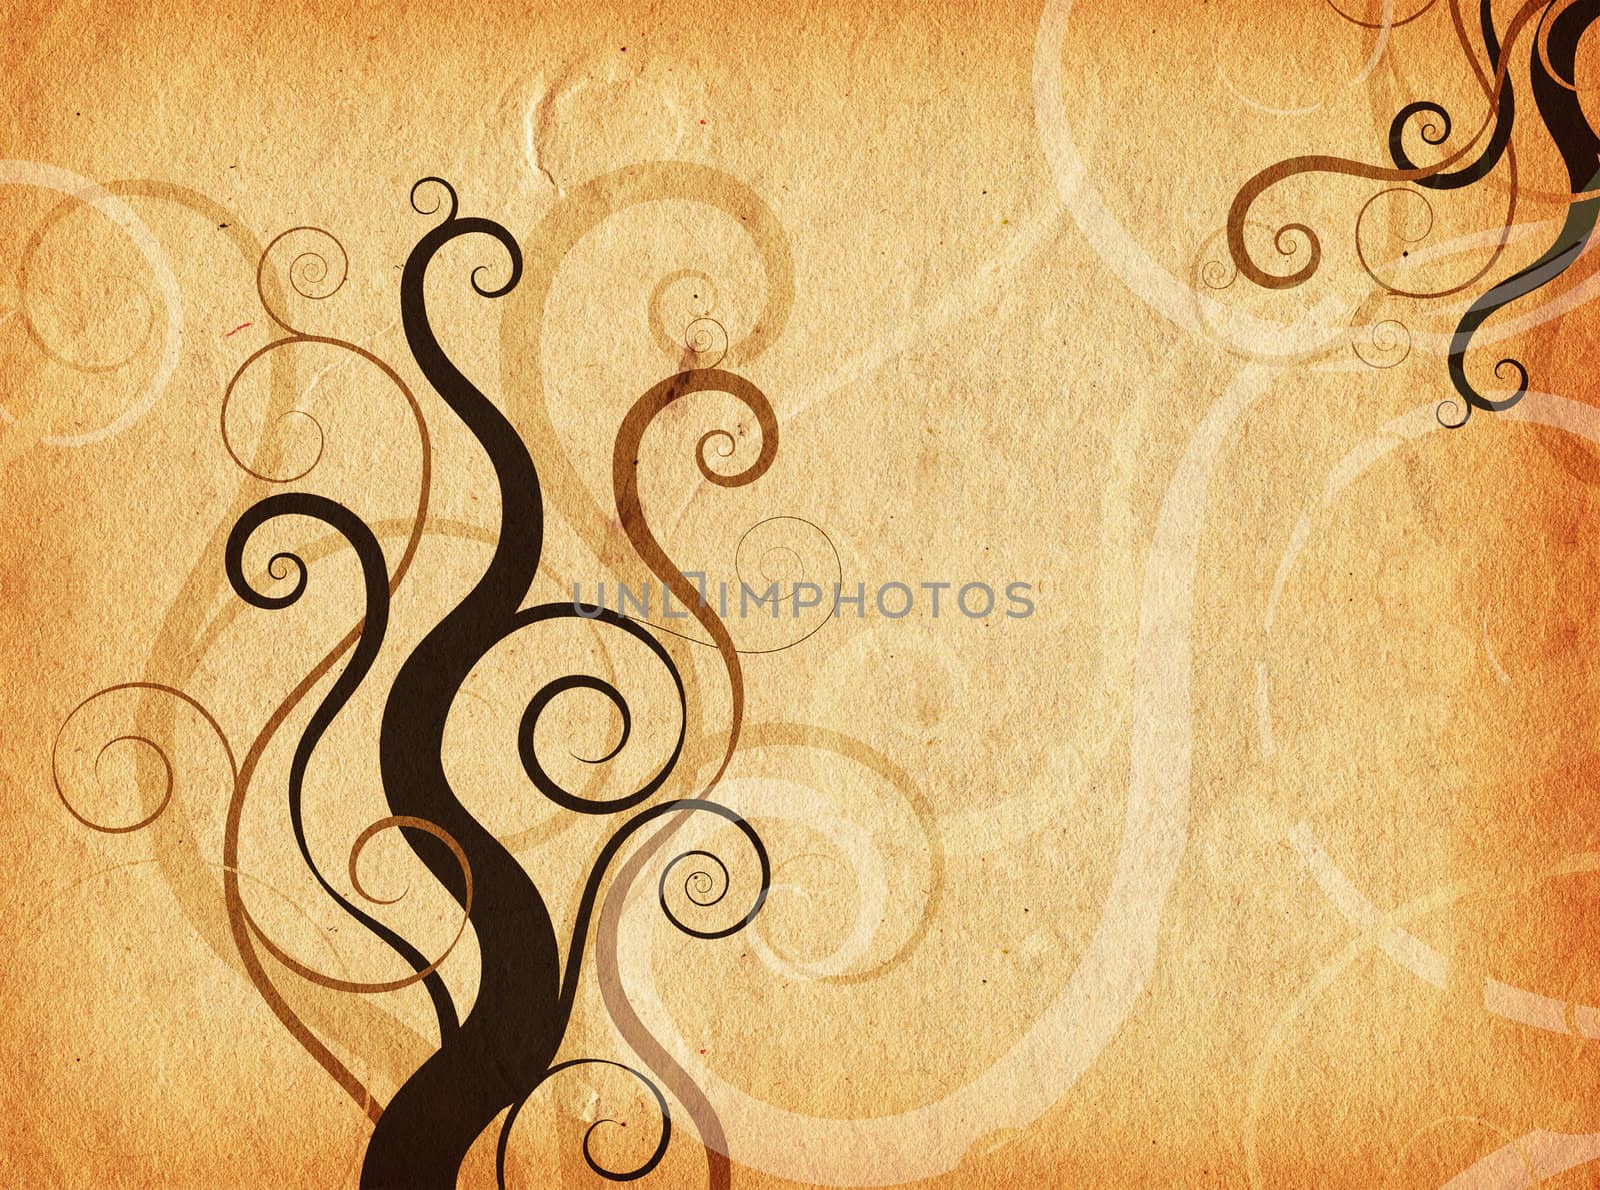 Swirls and curls on grunge style background